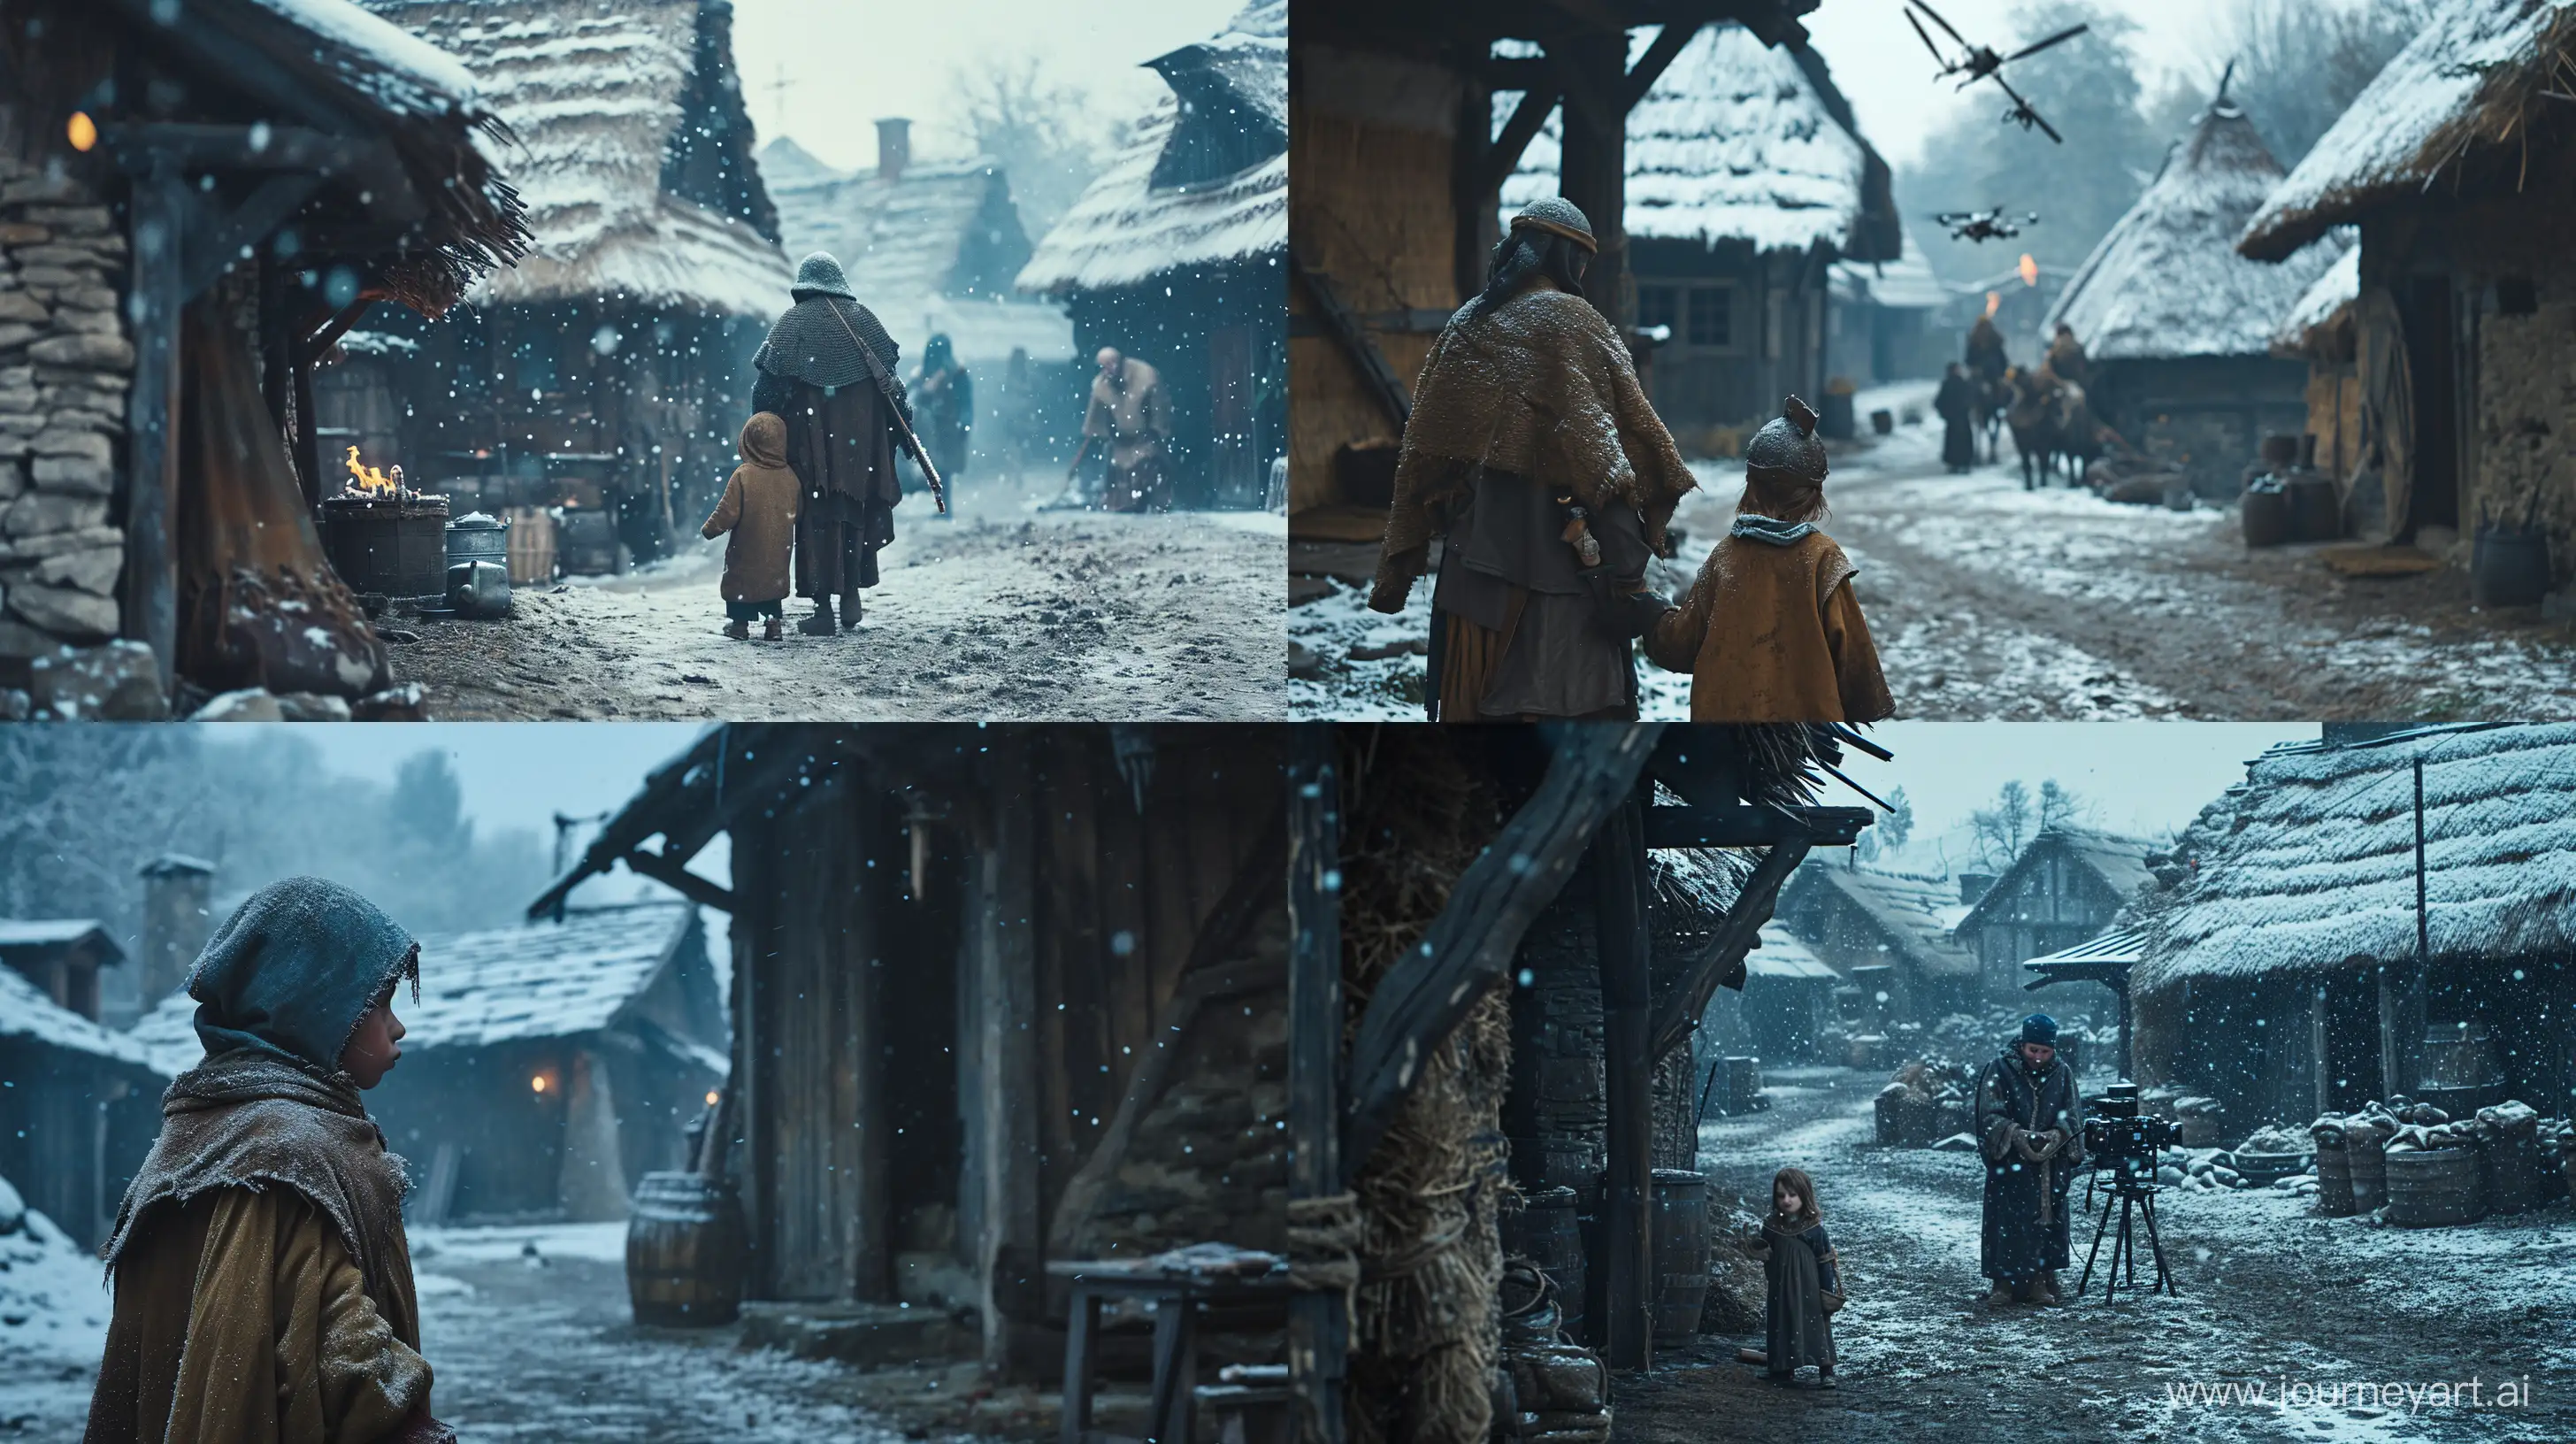 cinematic scene, 
jared leto child, farmer clothes medieval, in a medieval village snowing,  DRONE SHOT, ALEXA 65, BL camera, ARRI Signature Prime Lenses, 70mm --ar 16:9 --style raw --v 6